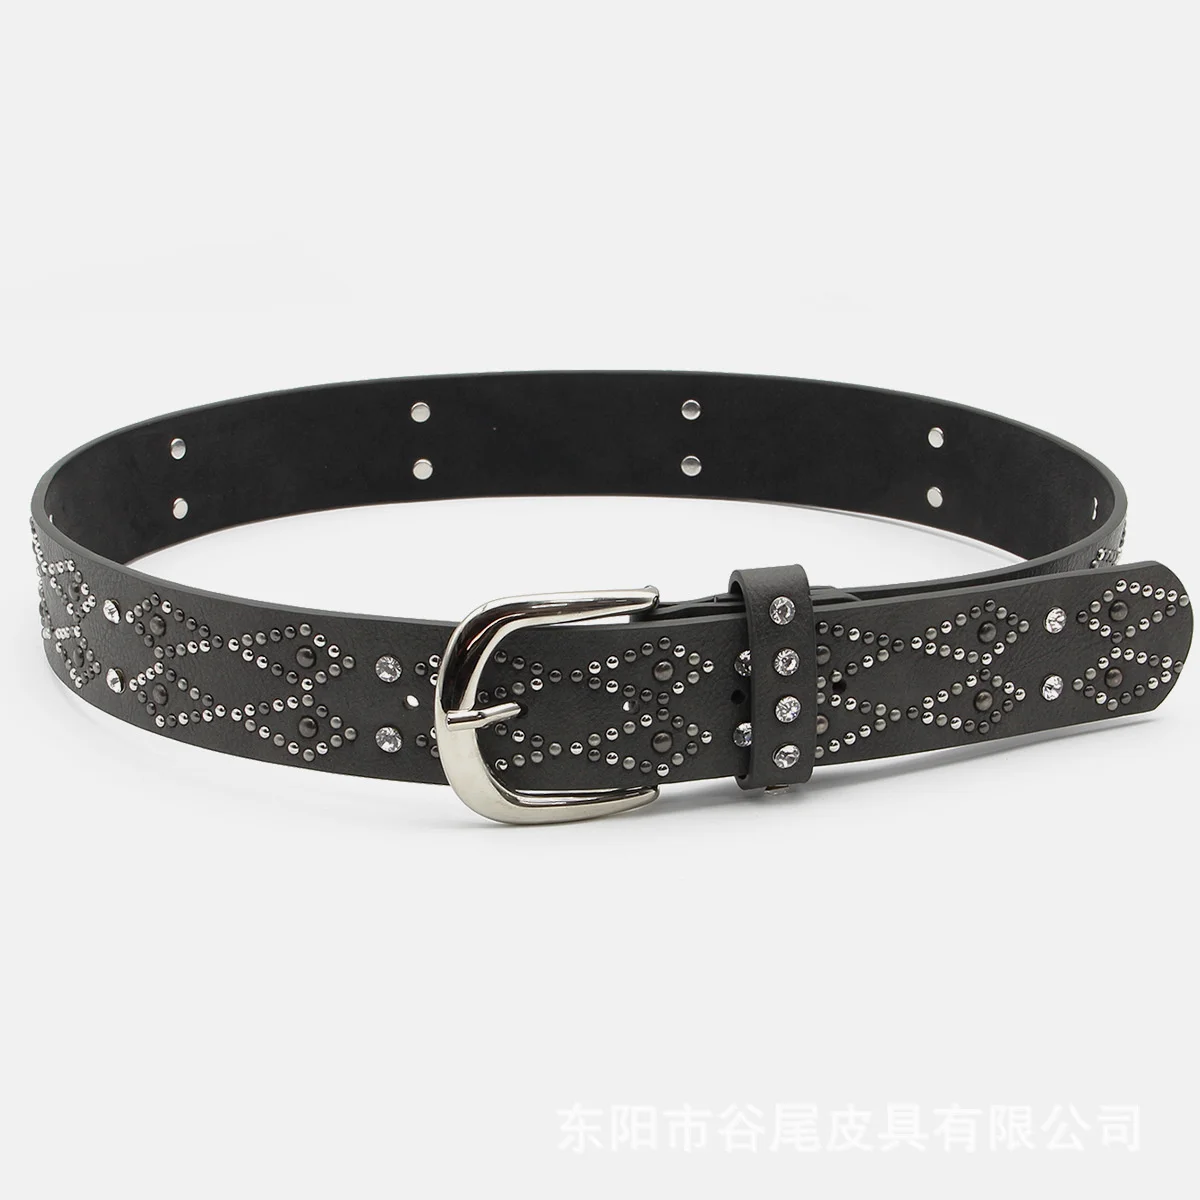 Women's belt dark gray PU leather rhinestone rivet inlaid with punk style boutique belt